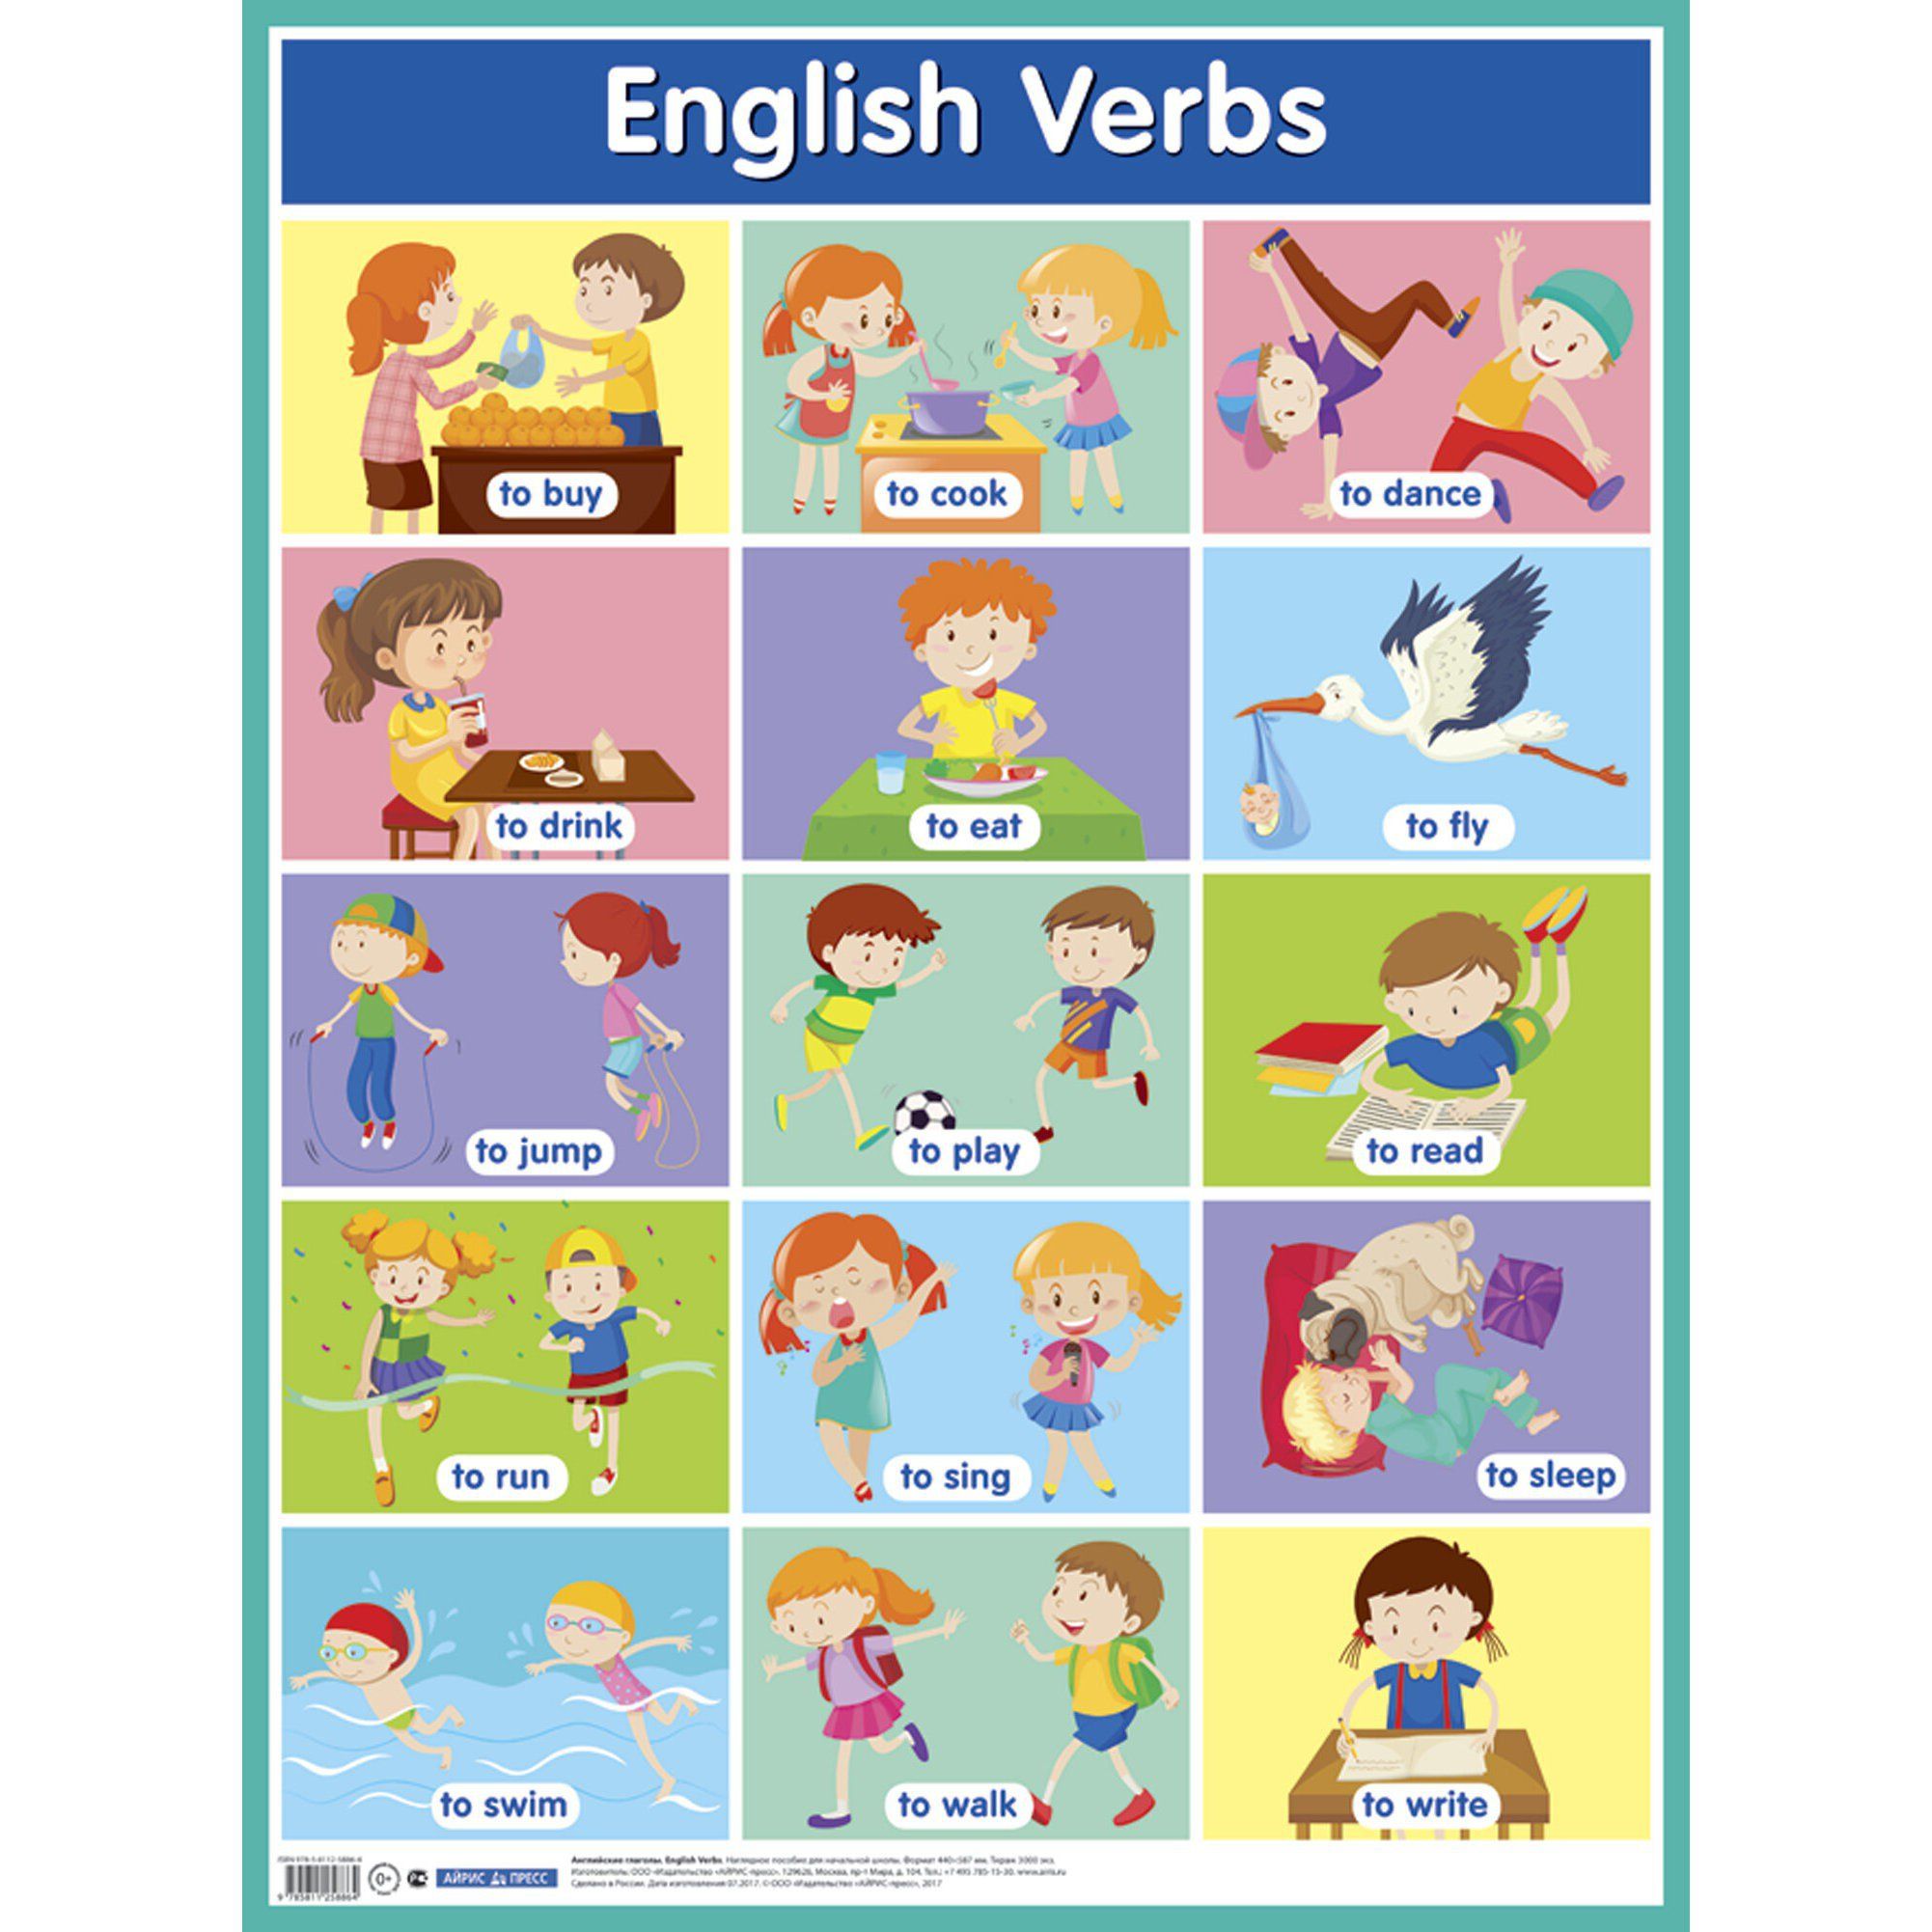 Английские глаголы аудио. Глаголы на английском для детей. Глаголы в английском языке для детей. Английские глаголы в картинках. Английские глаголы для дошкольников.